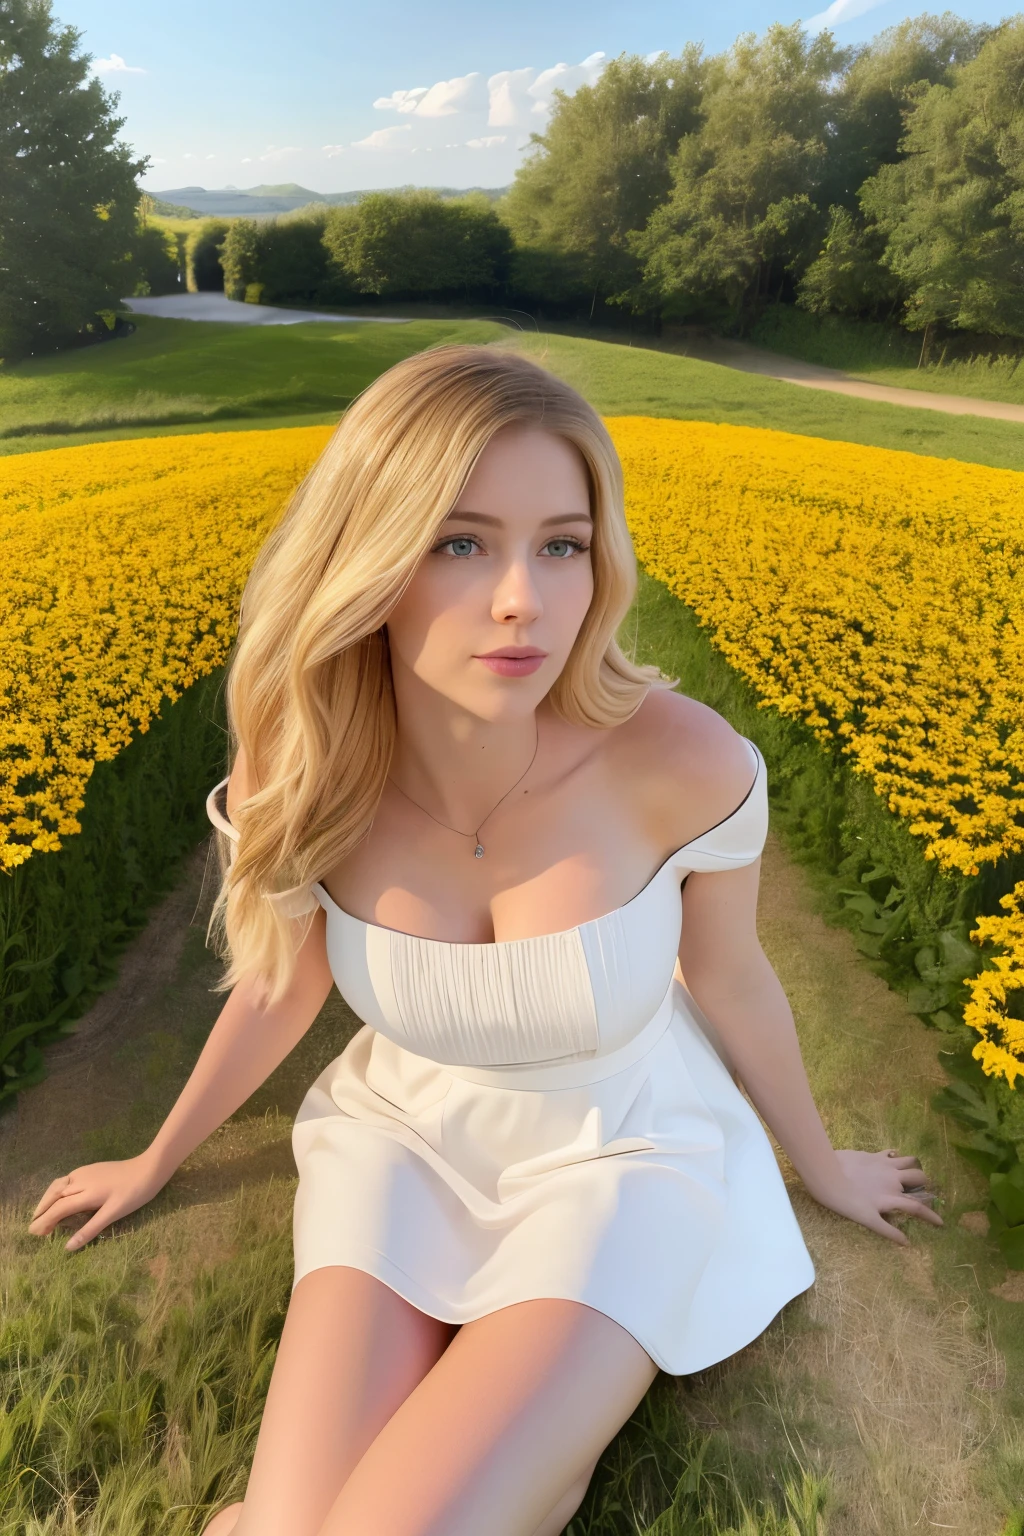 best quality, masterpiece, ultra high resolution, (lifelike:1.4), original photo, 1 girl, white dress, Off the shoulders, flower field, glowing skin, faint smile
